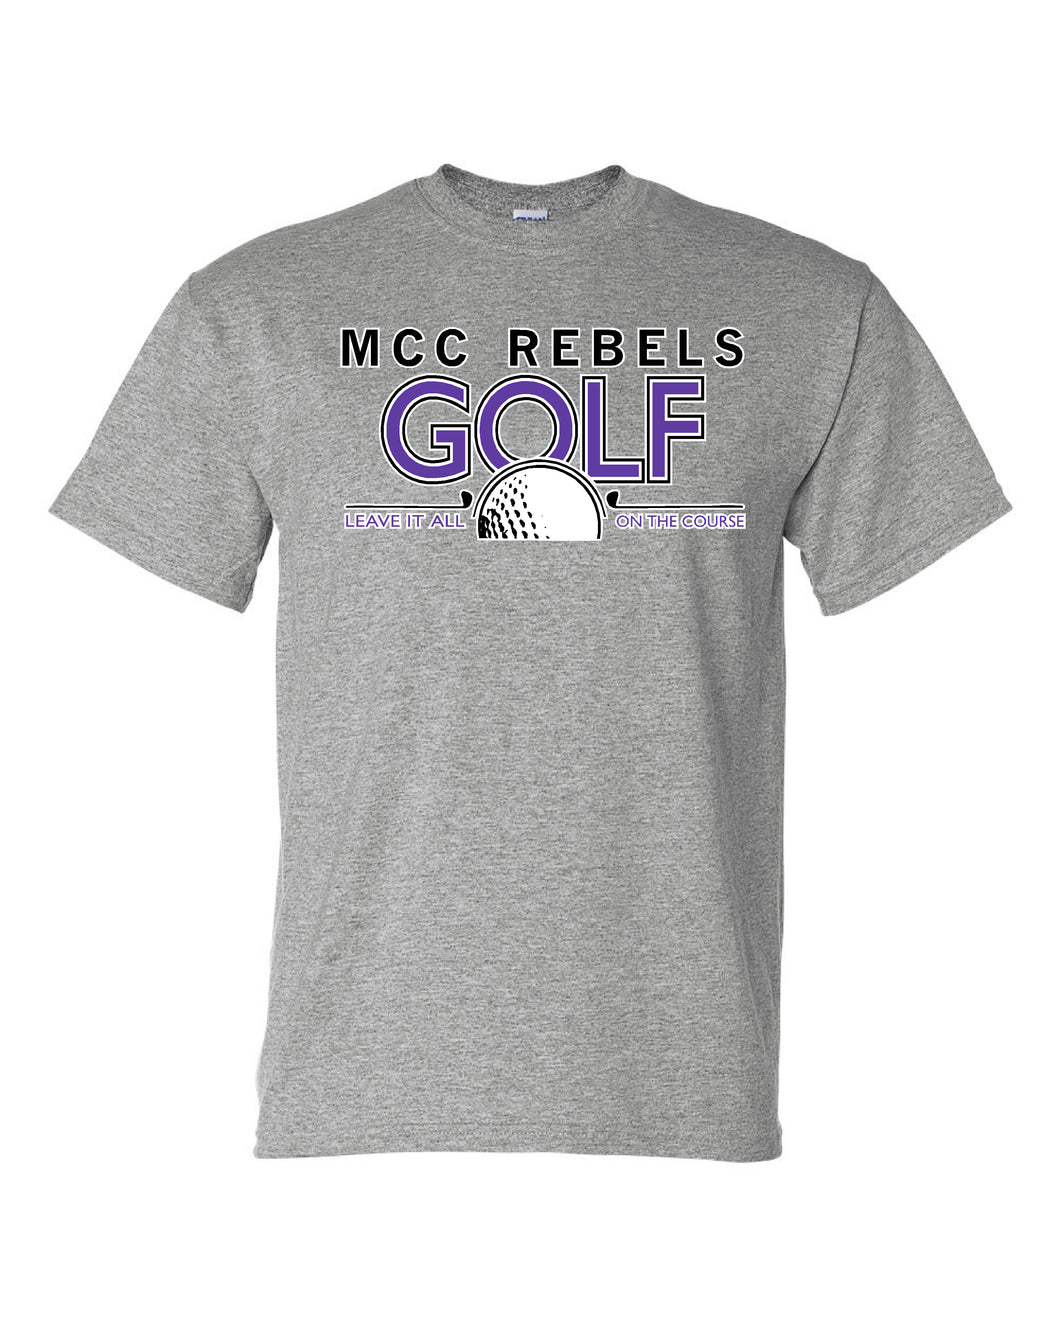 MCC Rebels Golf Gildan Tshirt - Grey